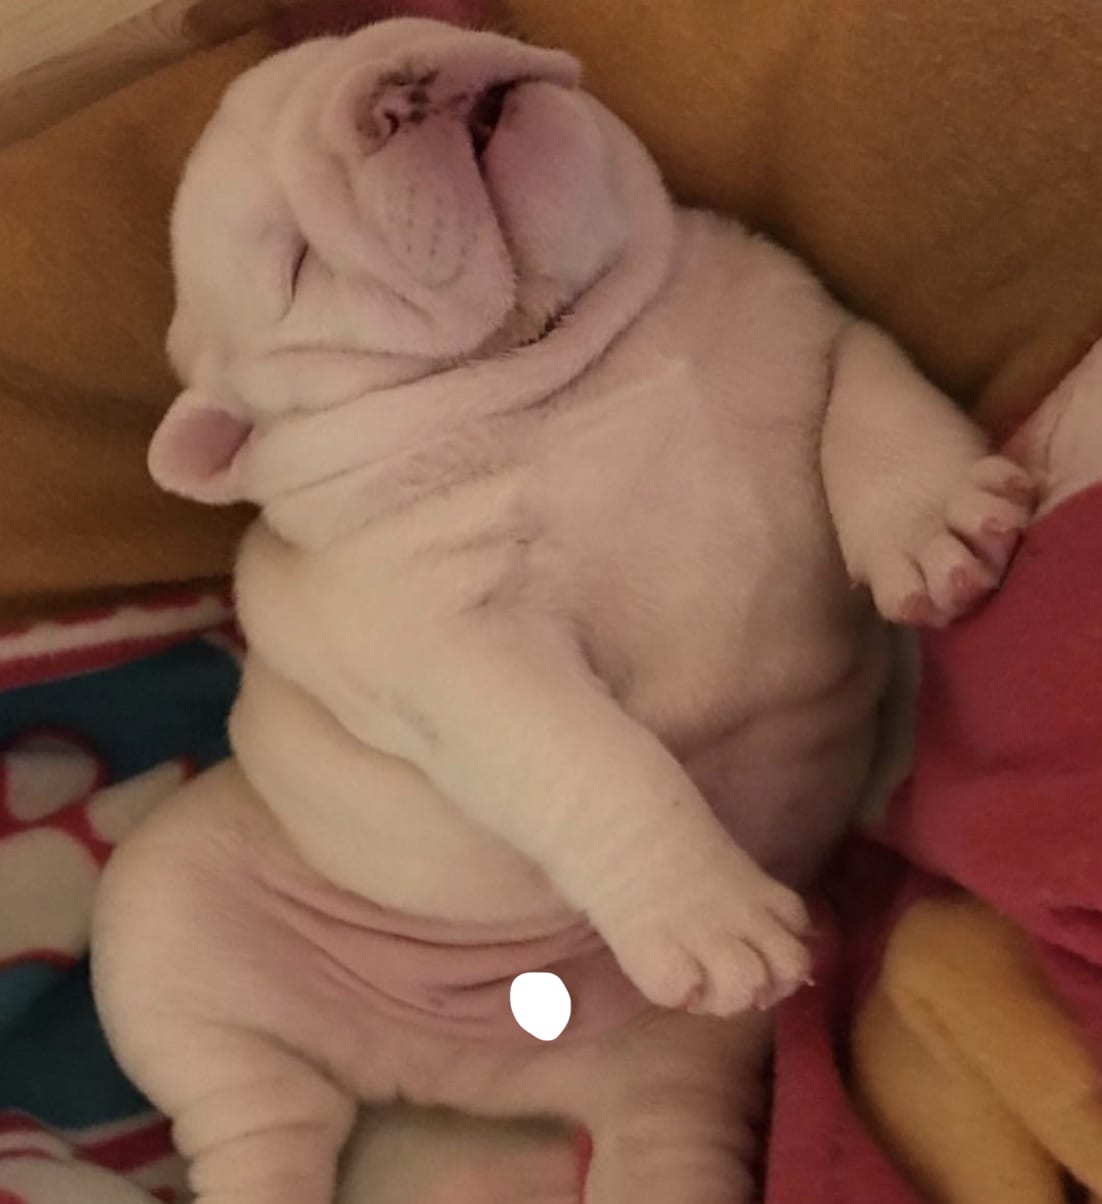 English Bulldog Puppy sleeping on the bed